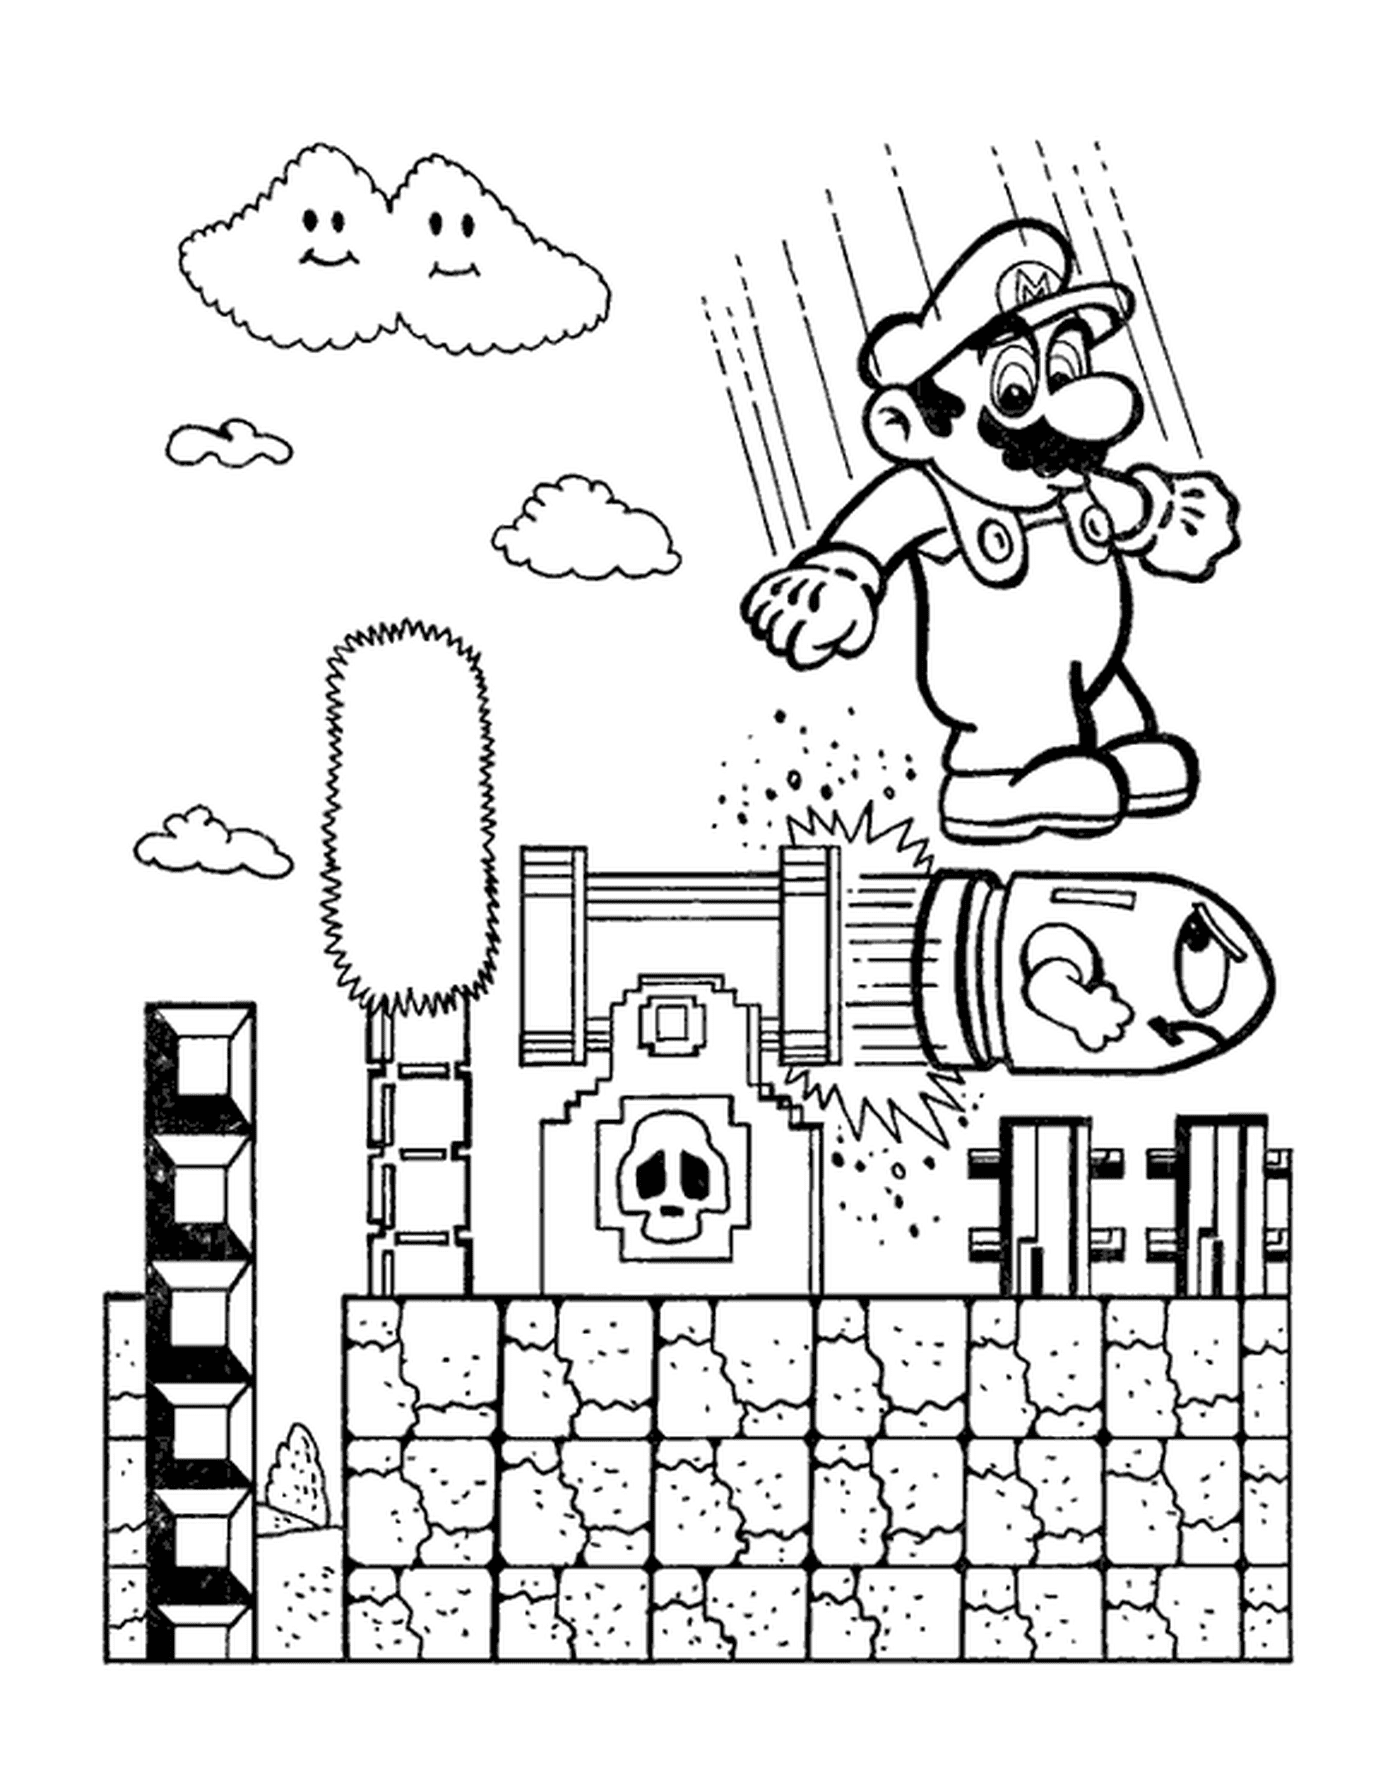 Mario saute sur une bombe